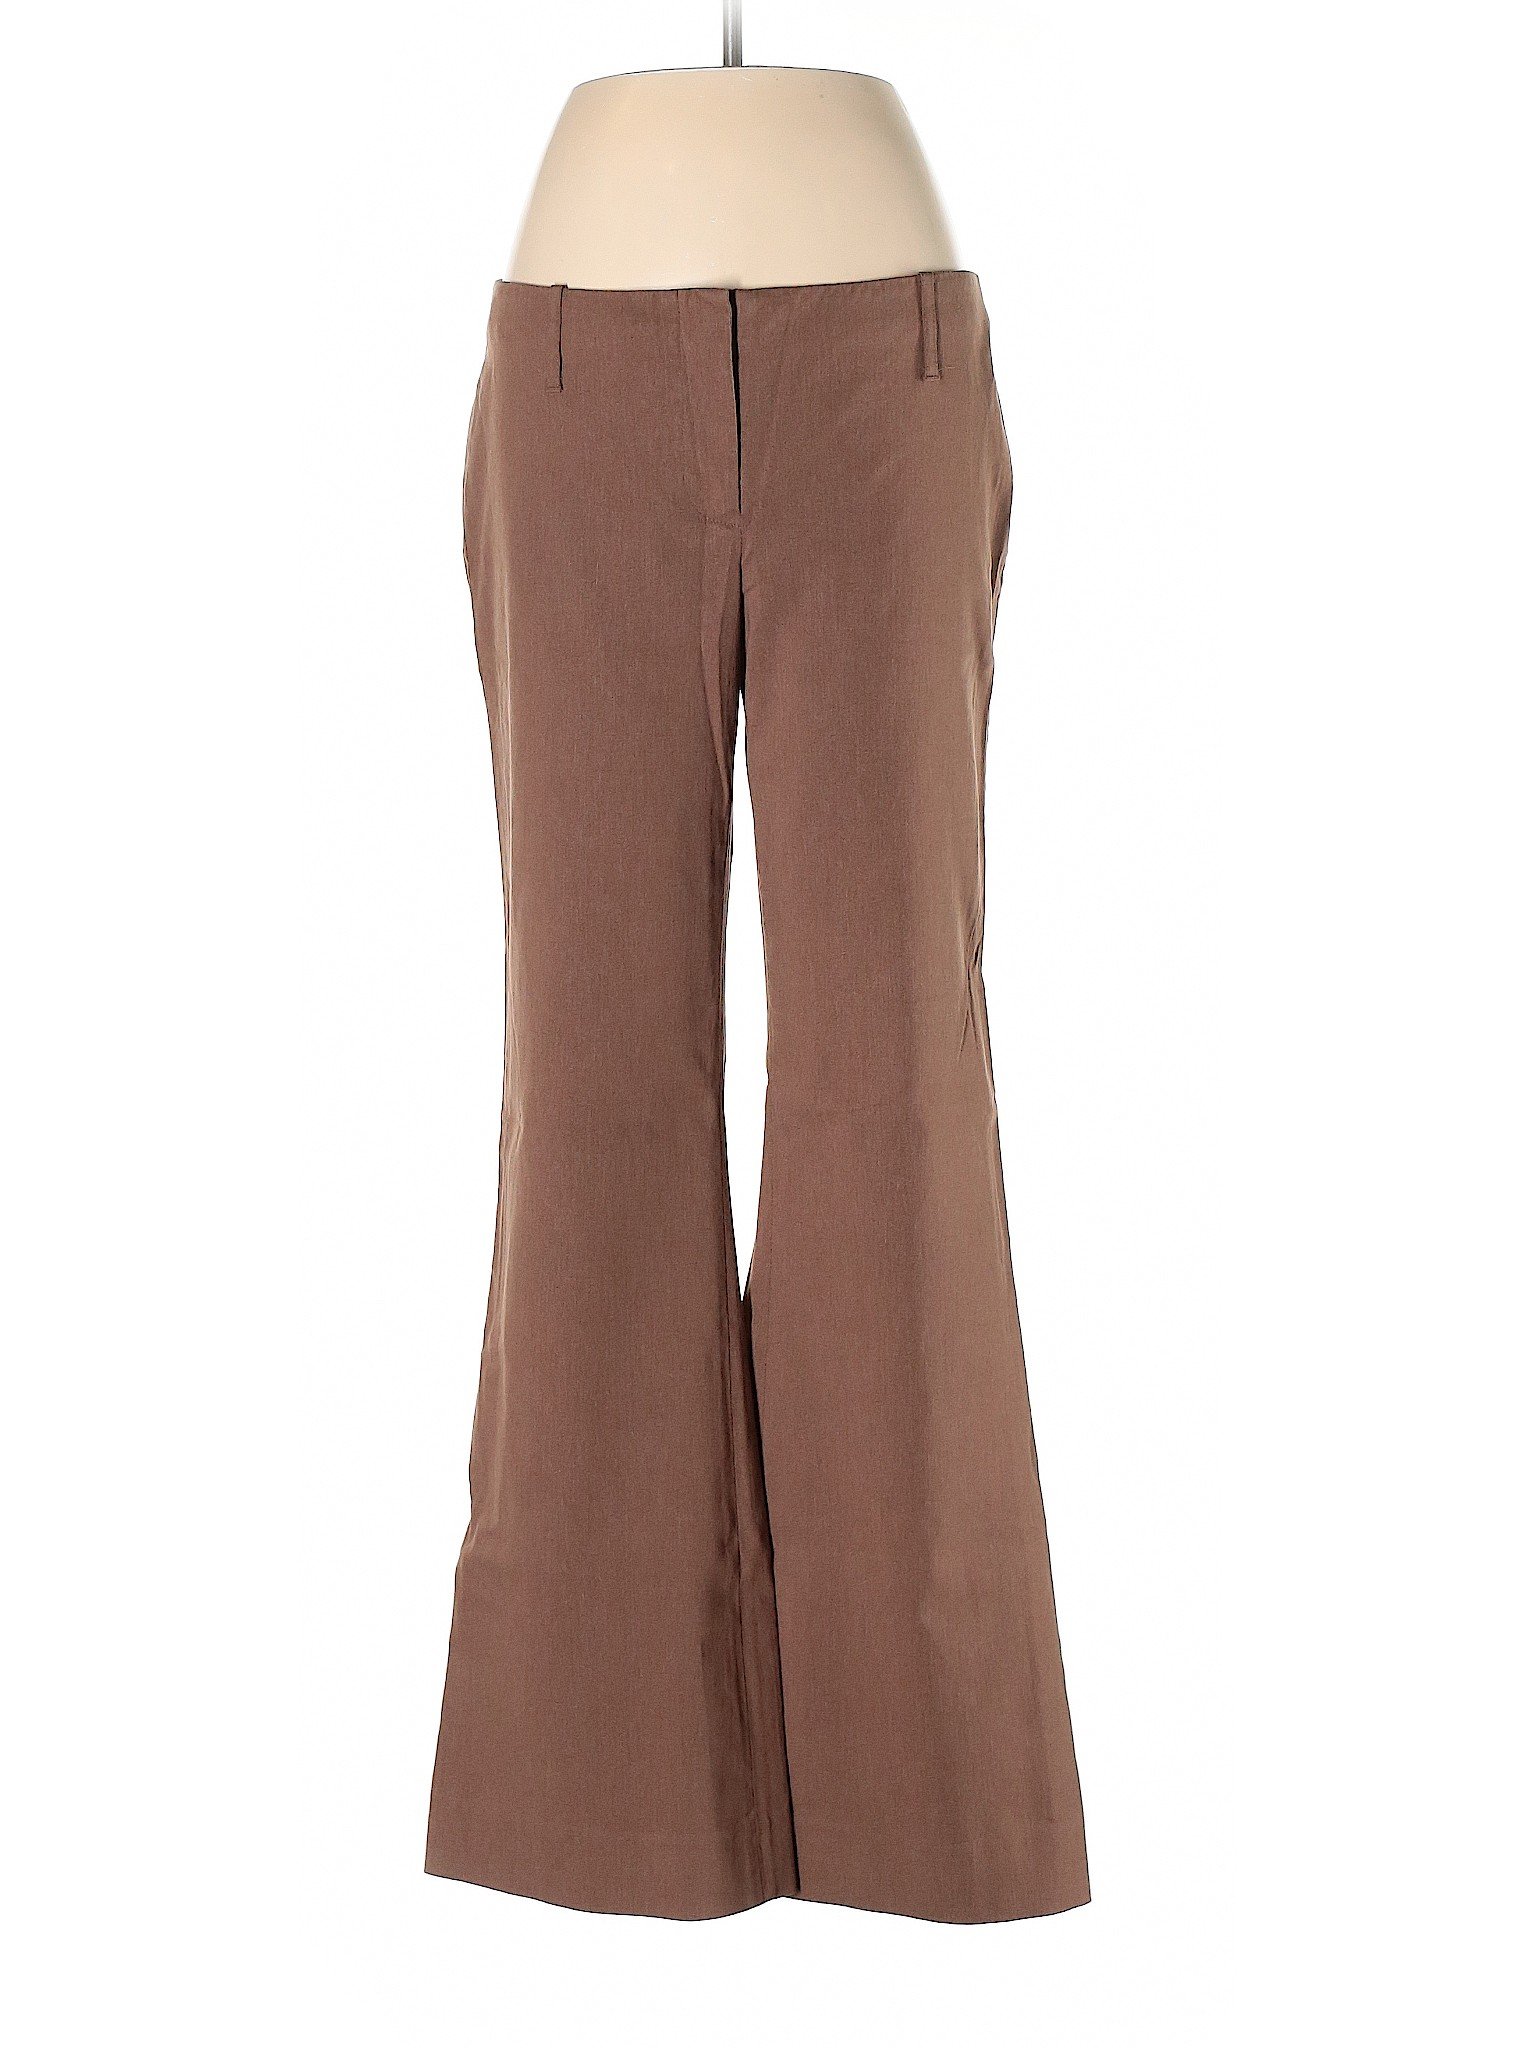 The Limited Women Brown Dress Pants 8 | eBay